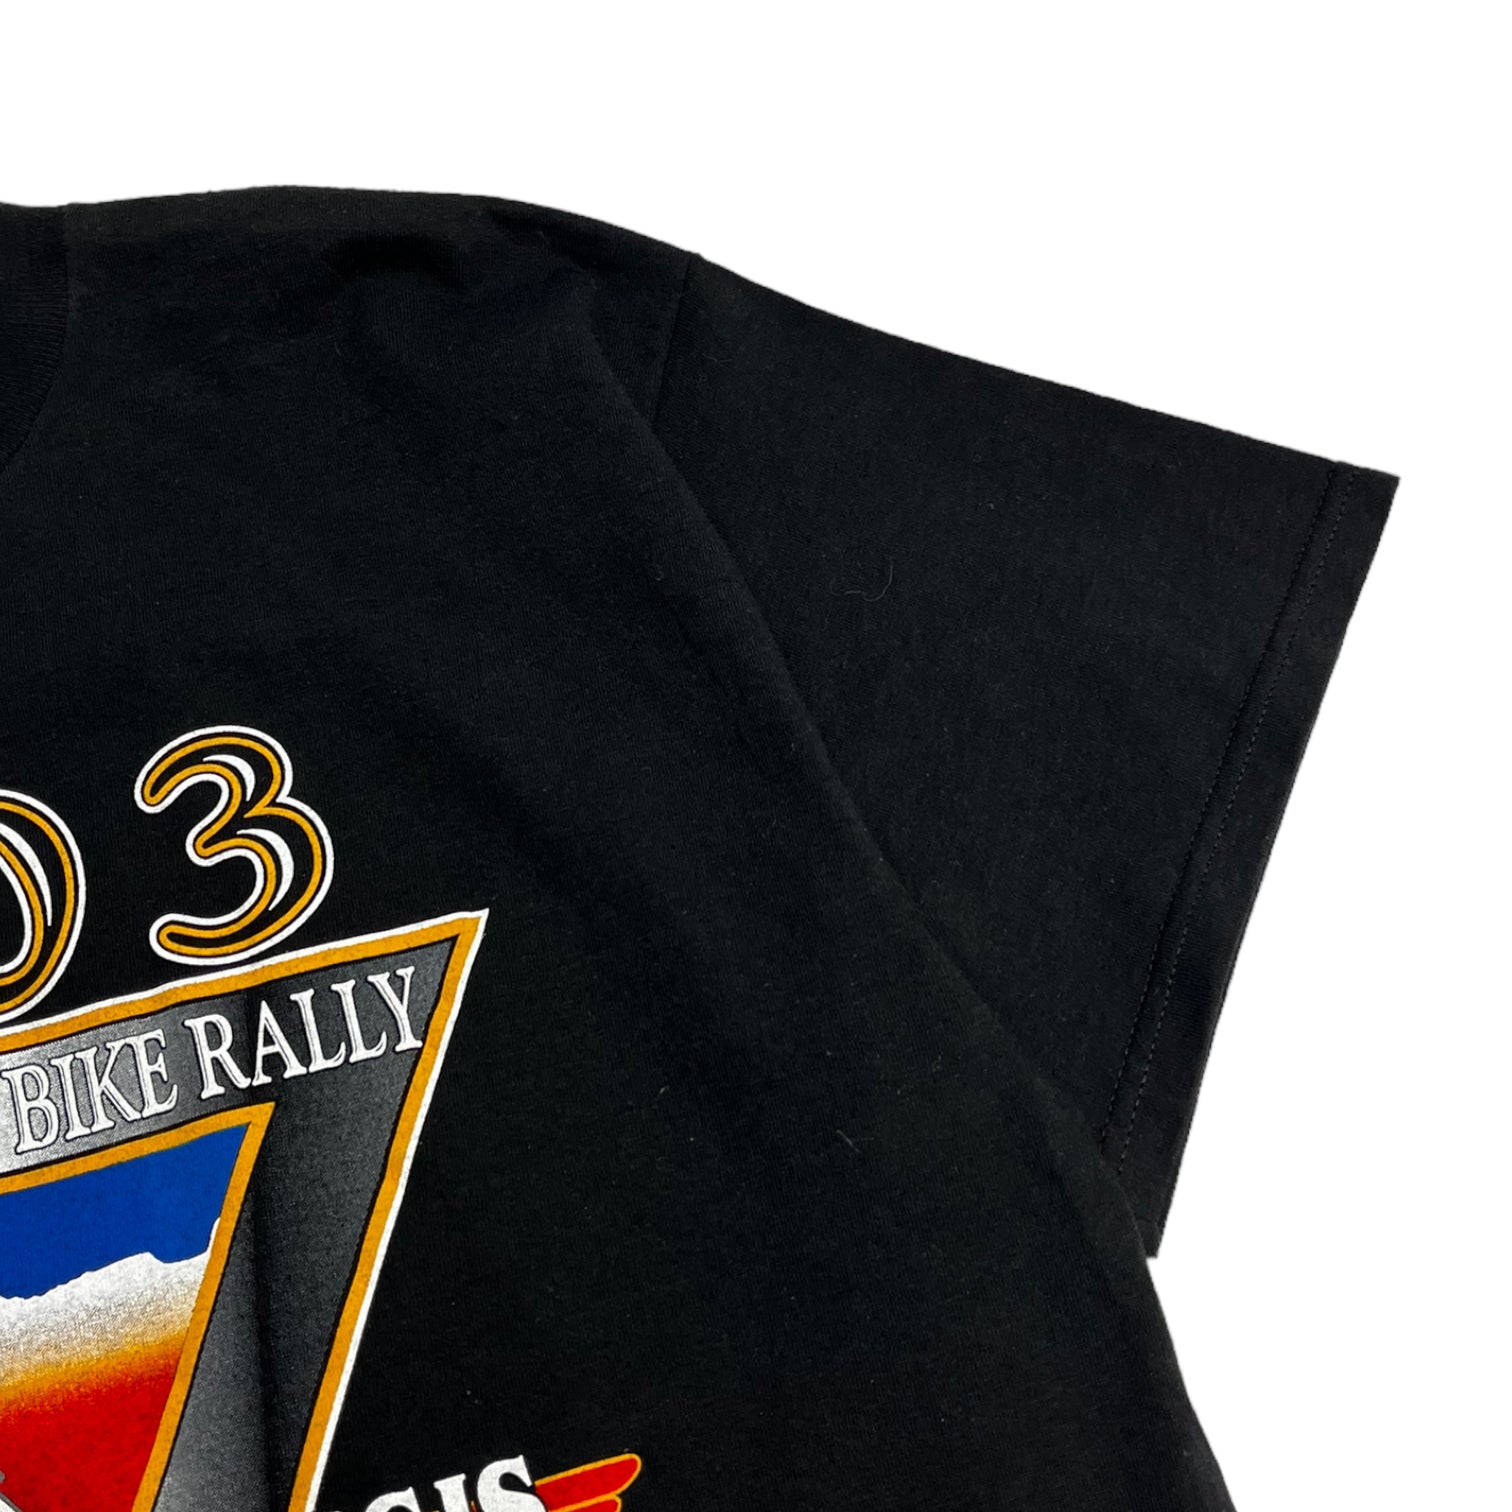 2003 Sturgis "World's Largest Bike Rally" Shirt - Black Biker Shirt